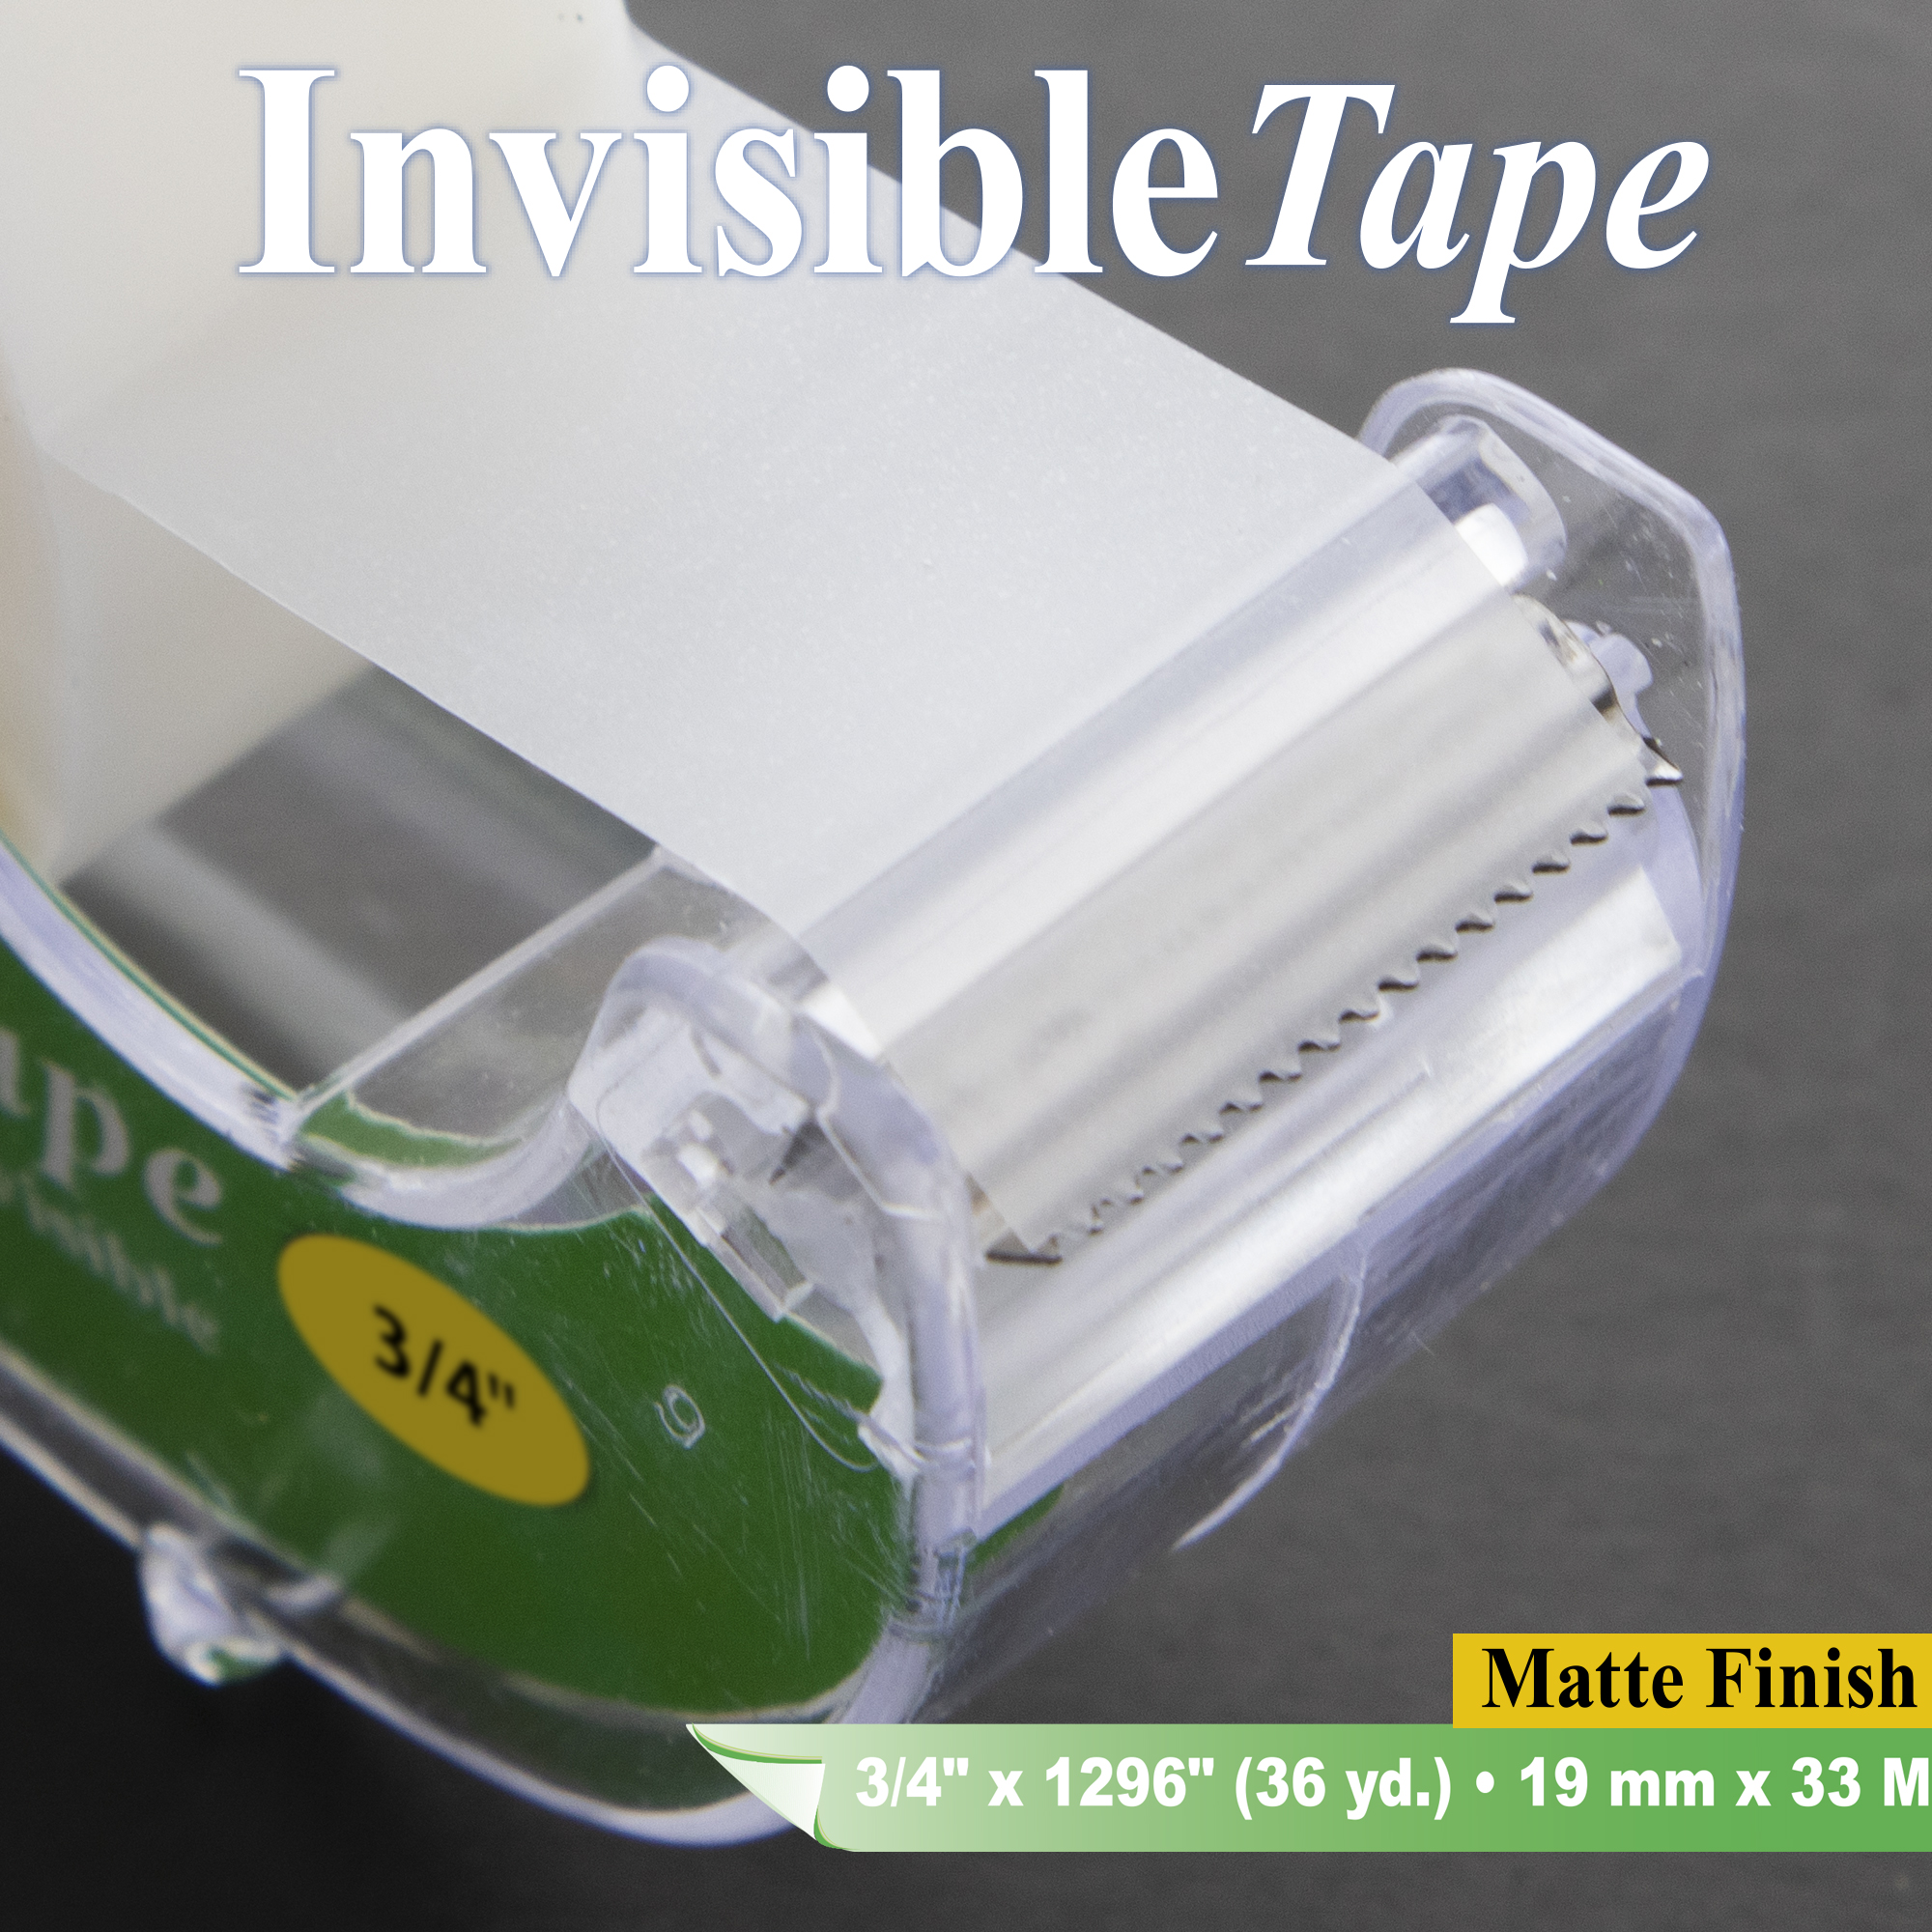 Acrylic Tape Dispenser for Identitape - Cleaver Scientific